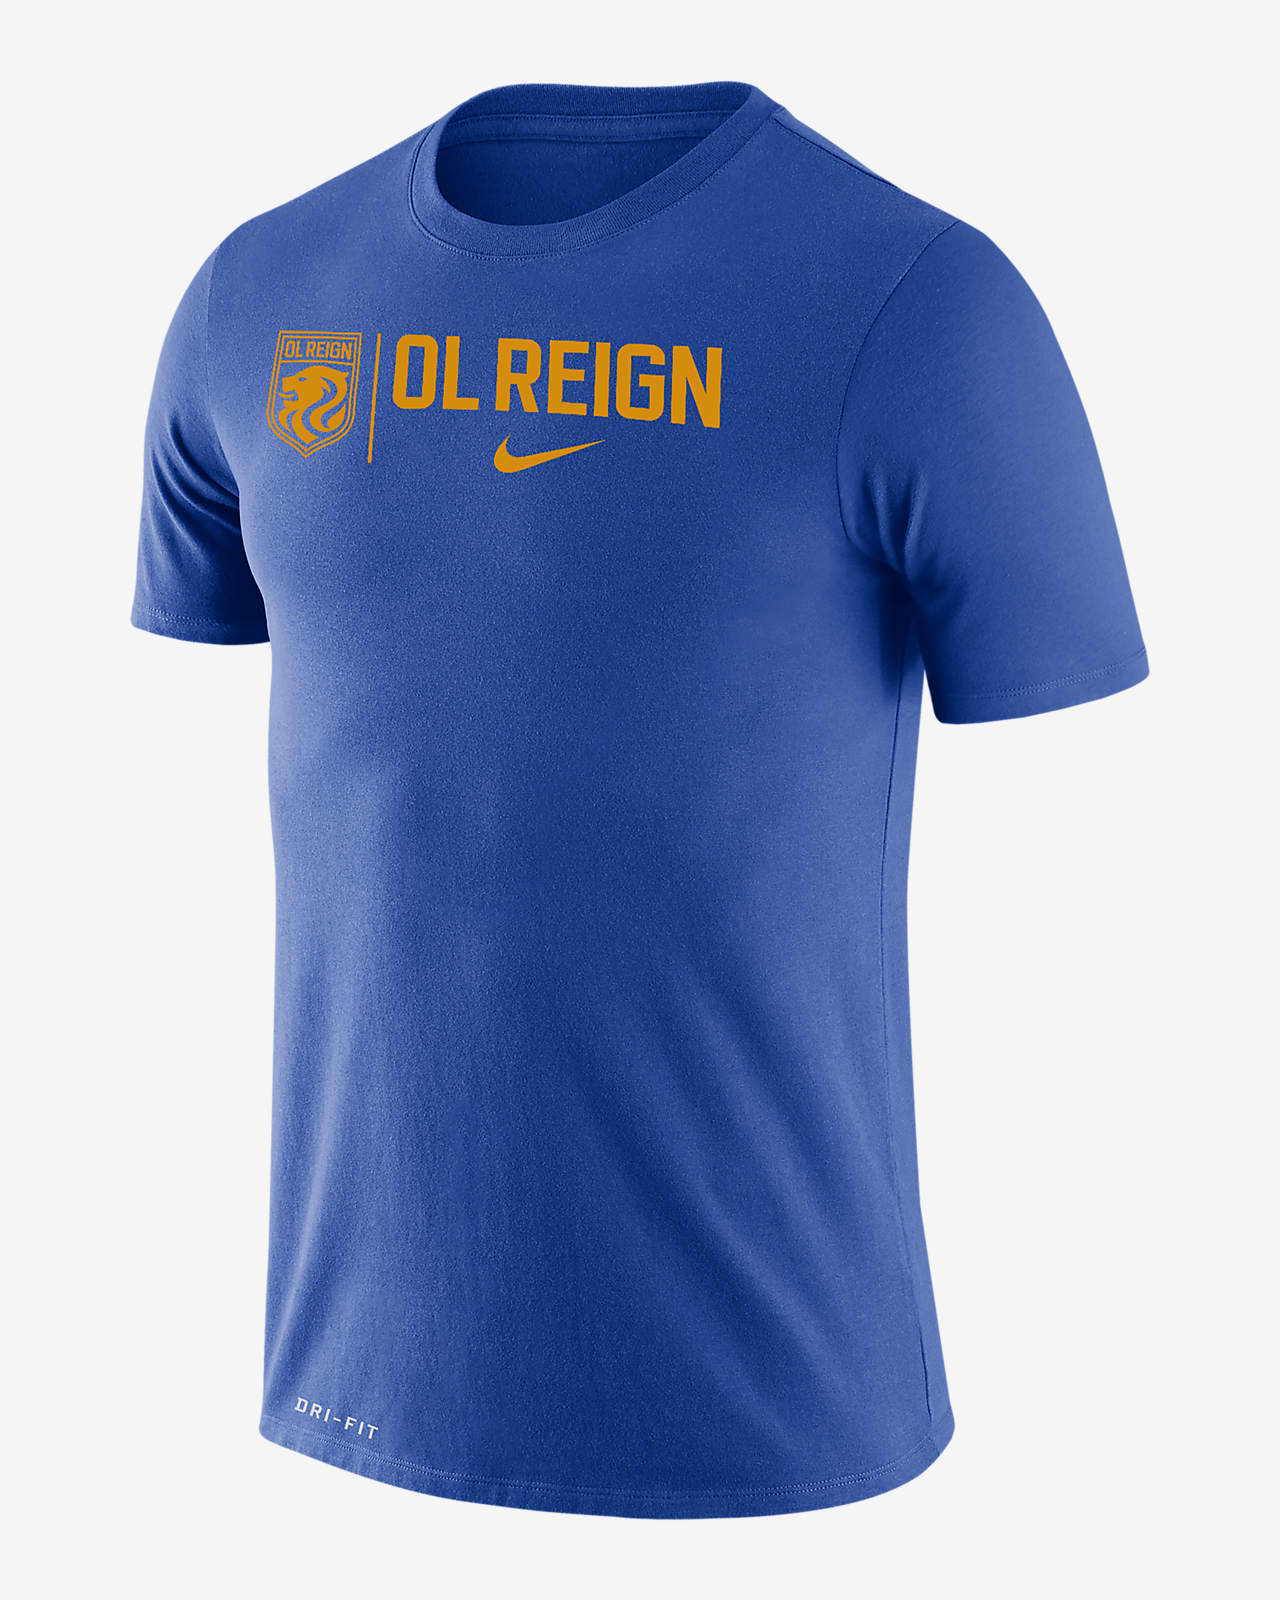 OL Reign Legend Men's Nike Dri-FIT Soccer T-Shirt